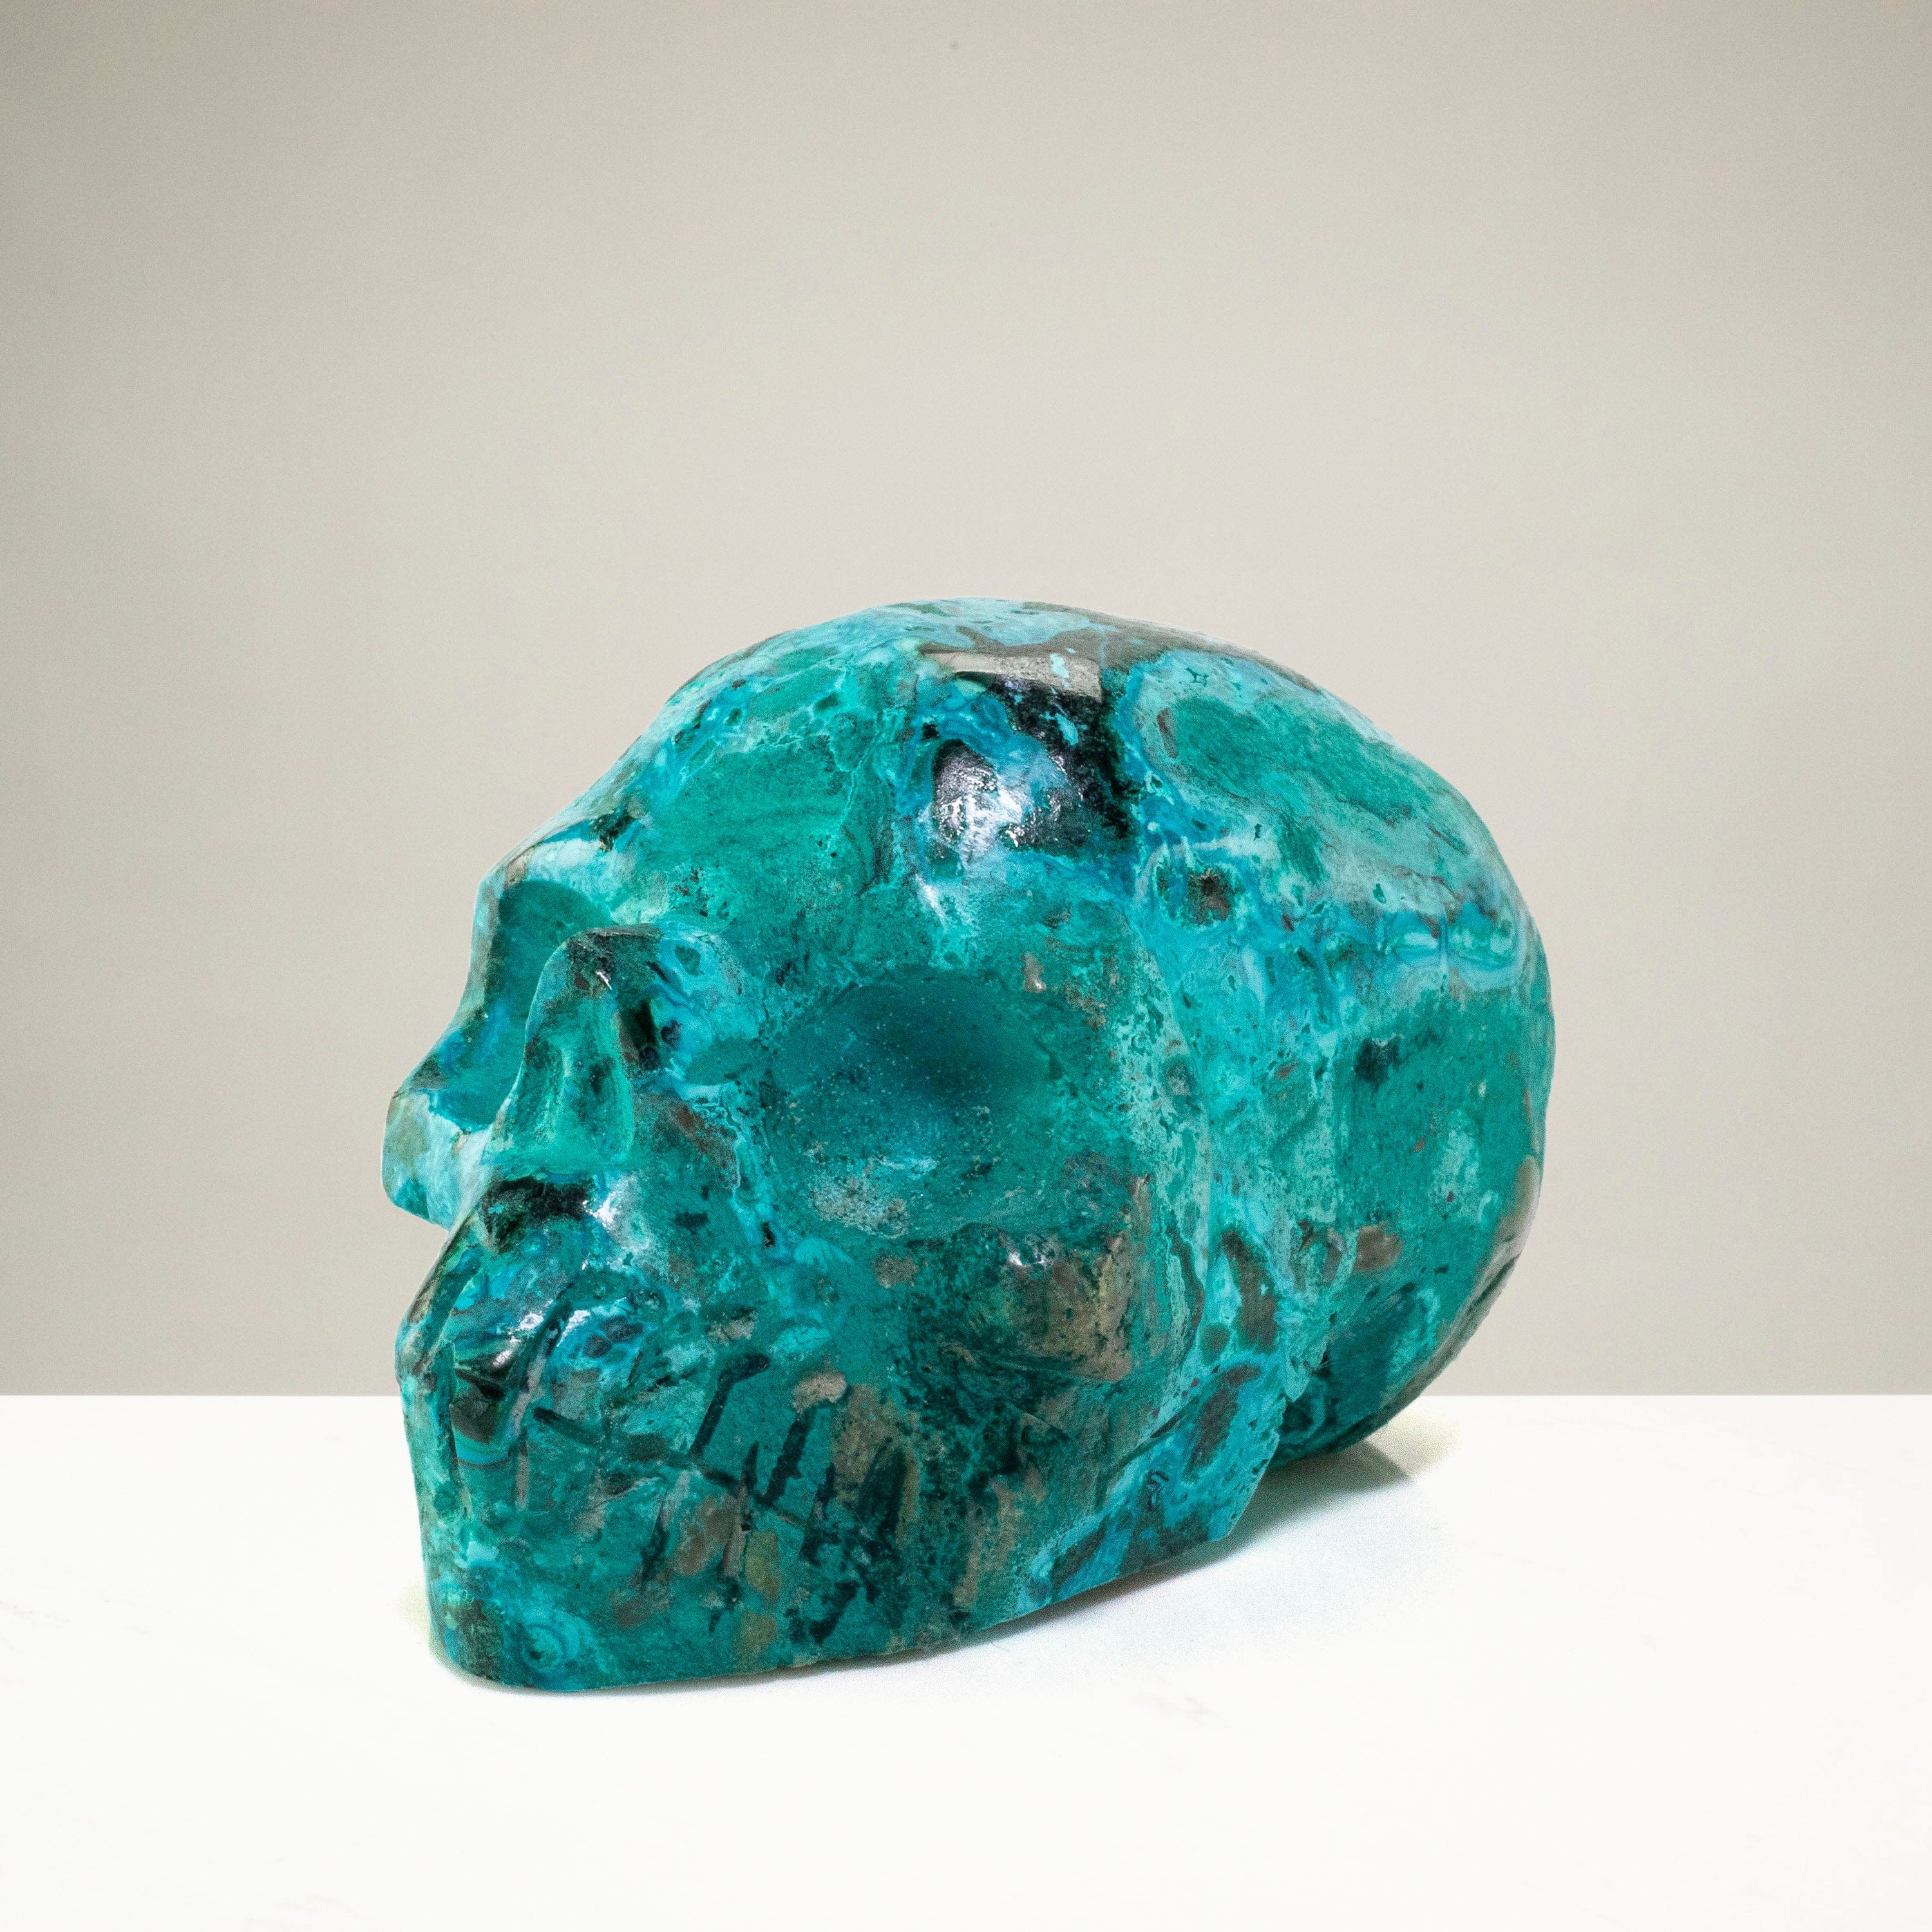 Kalifano Malachite Chrysocolla Skull Carving 3" / 143g SK600-CRY.001